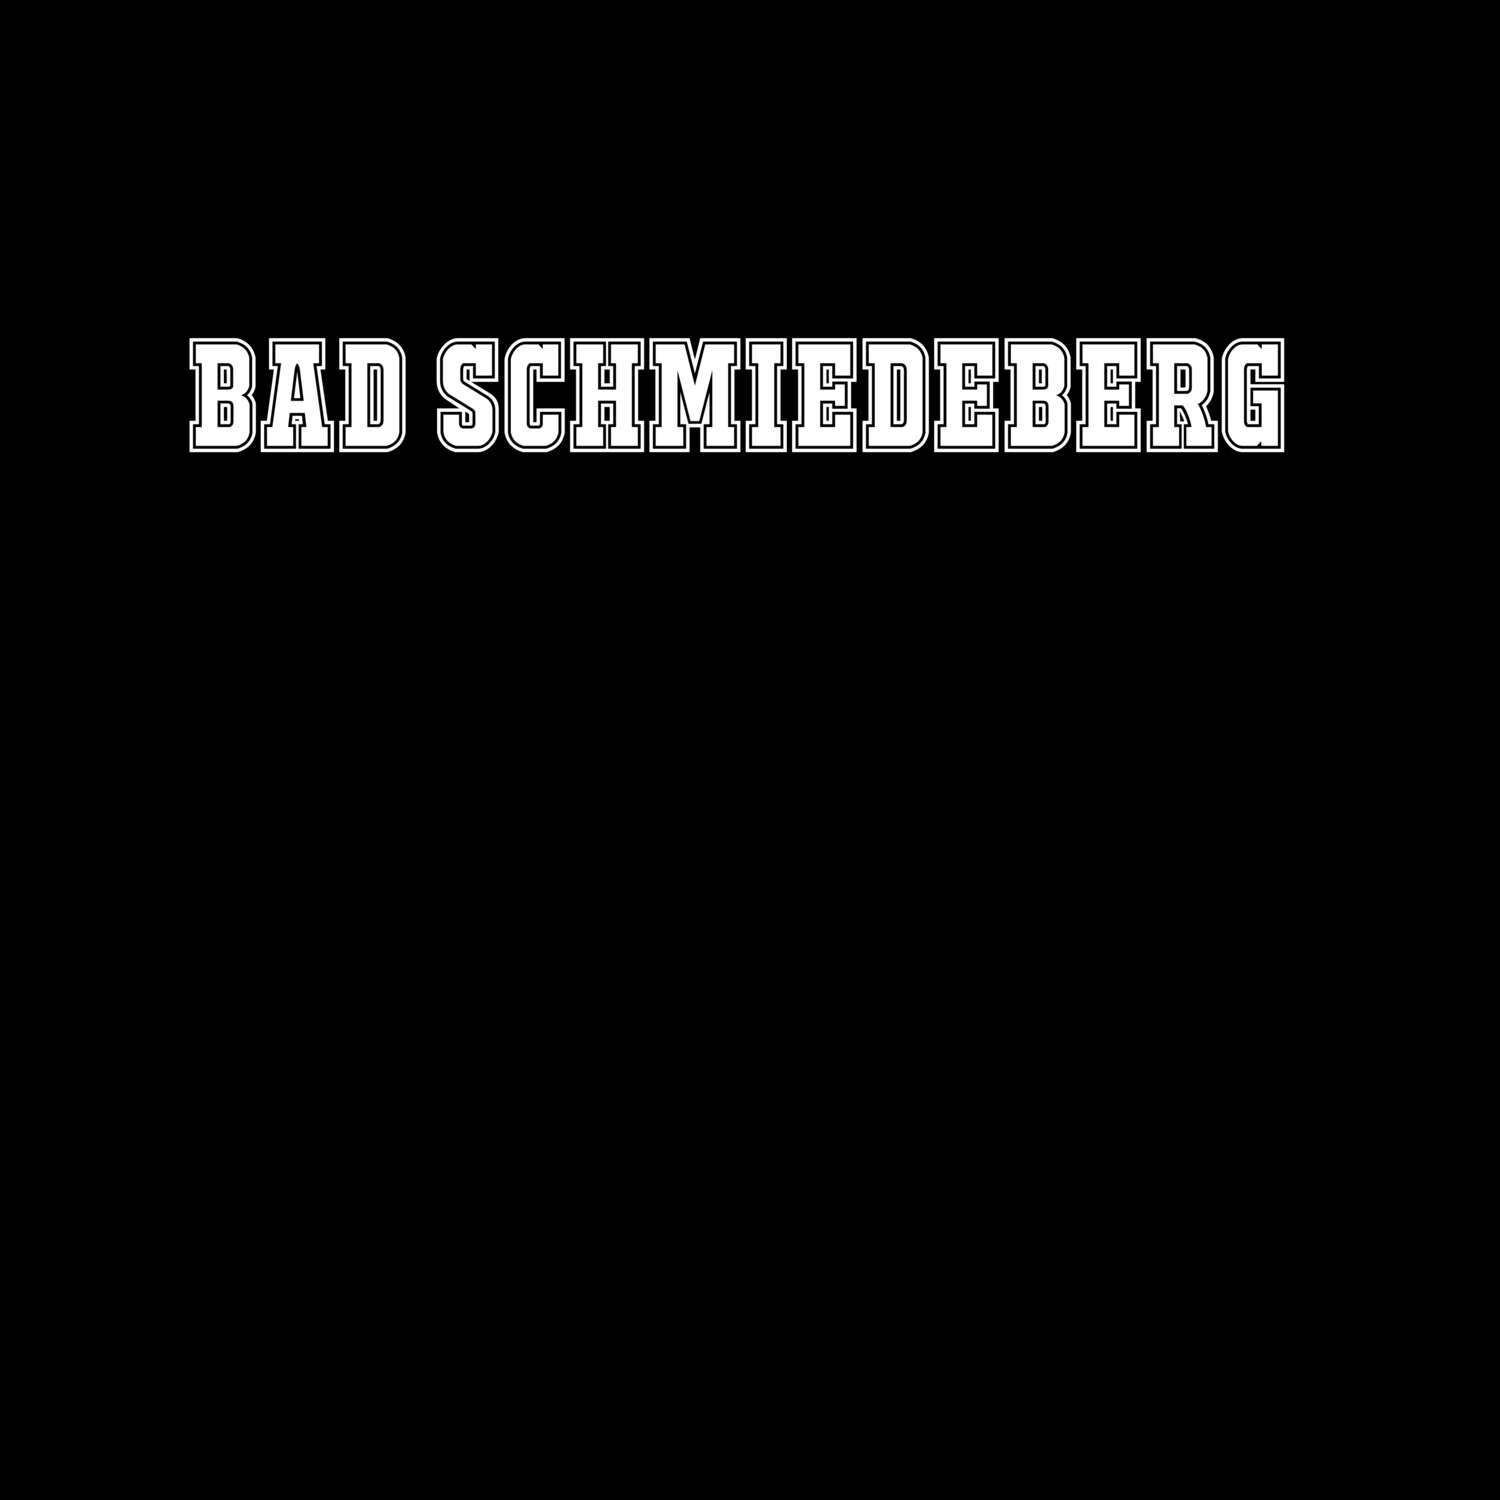 Bad Schmiedeberg T-Shirt »Classic«